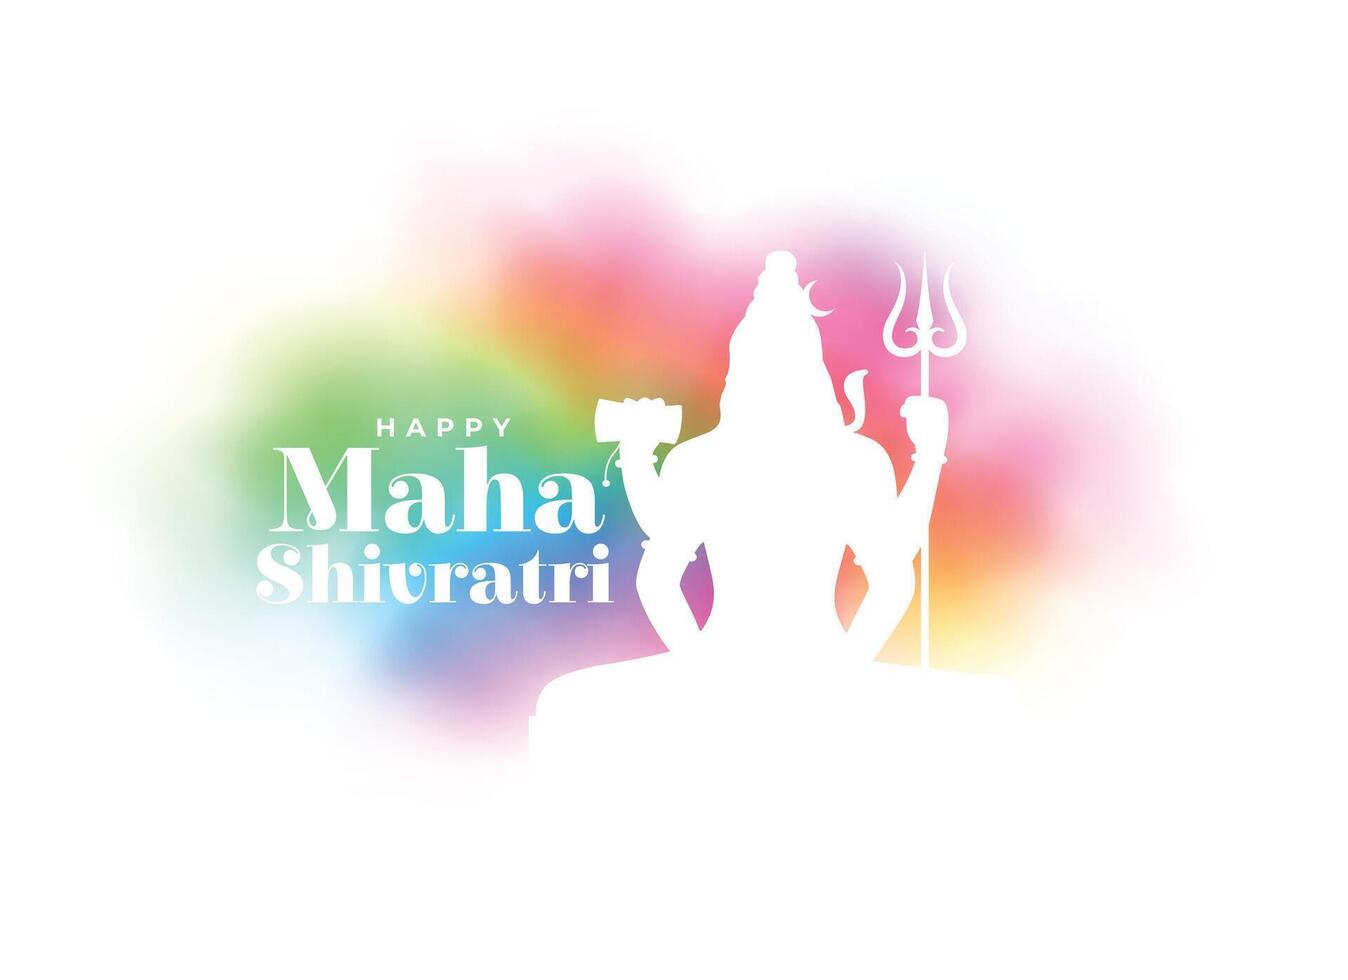 papercut style happy maha shivratri religious background design vector